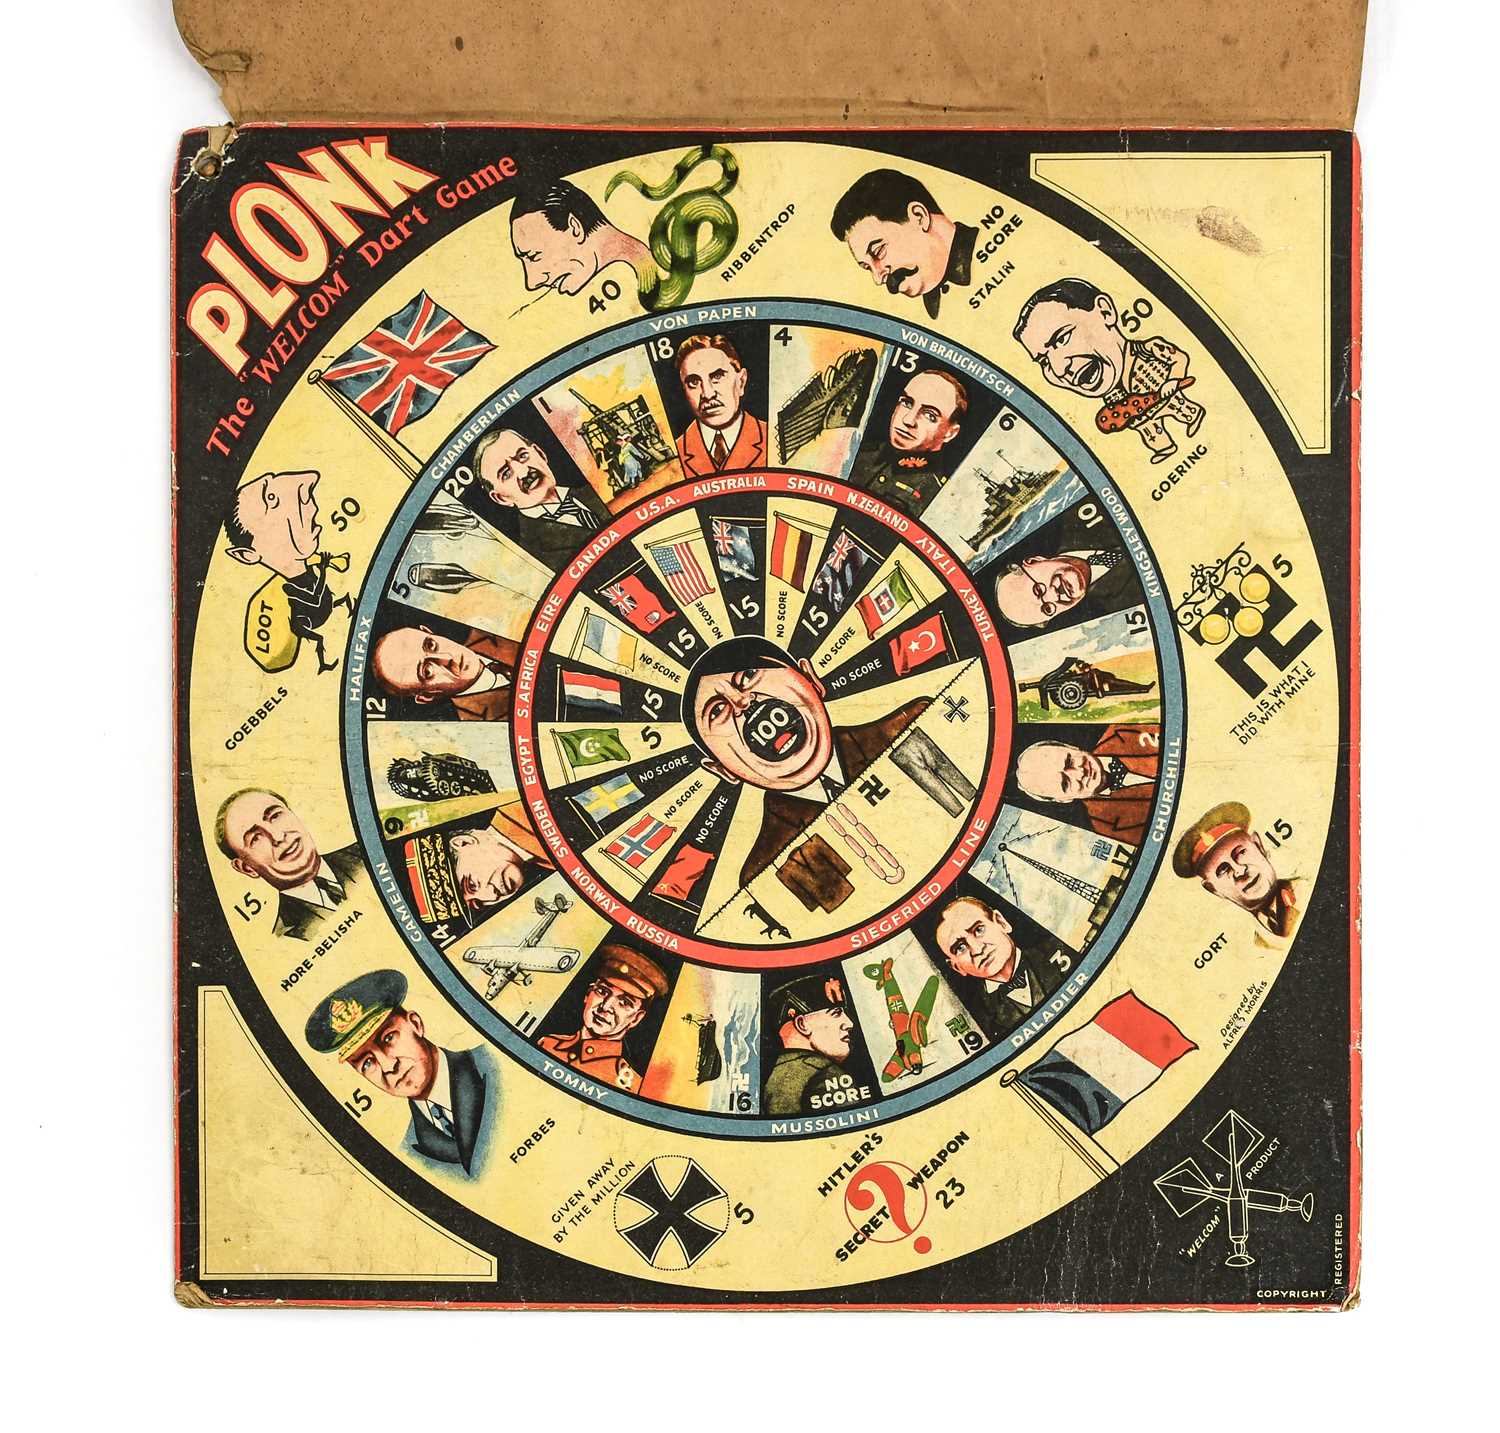 A Second World War Propaganda 'Welcom' "Plonk" Dart Game, the square card dartboard printed in